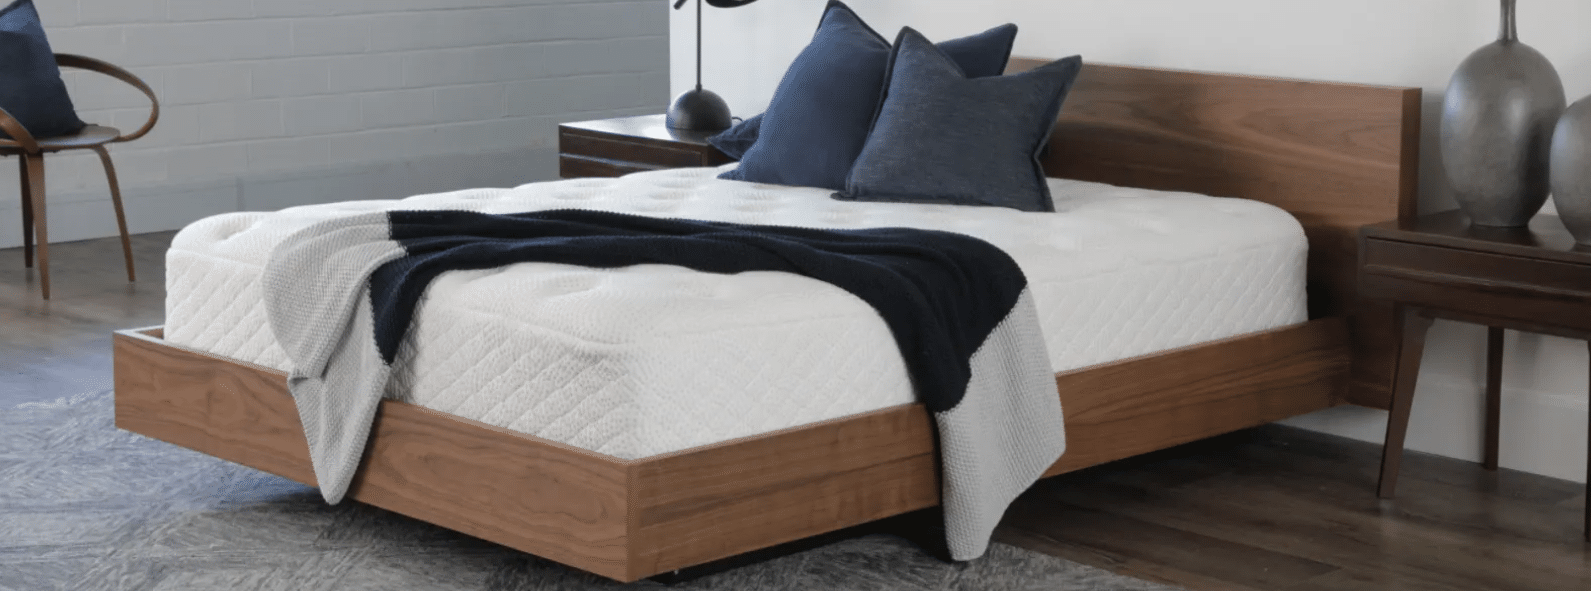 luuf plush mattress reviews